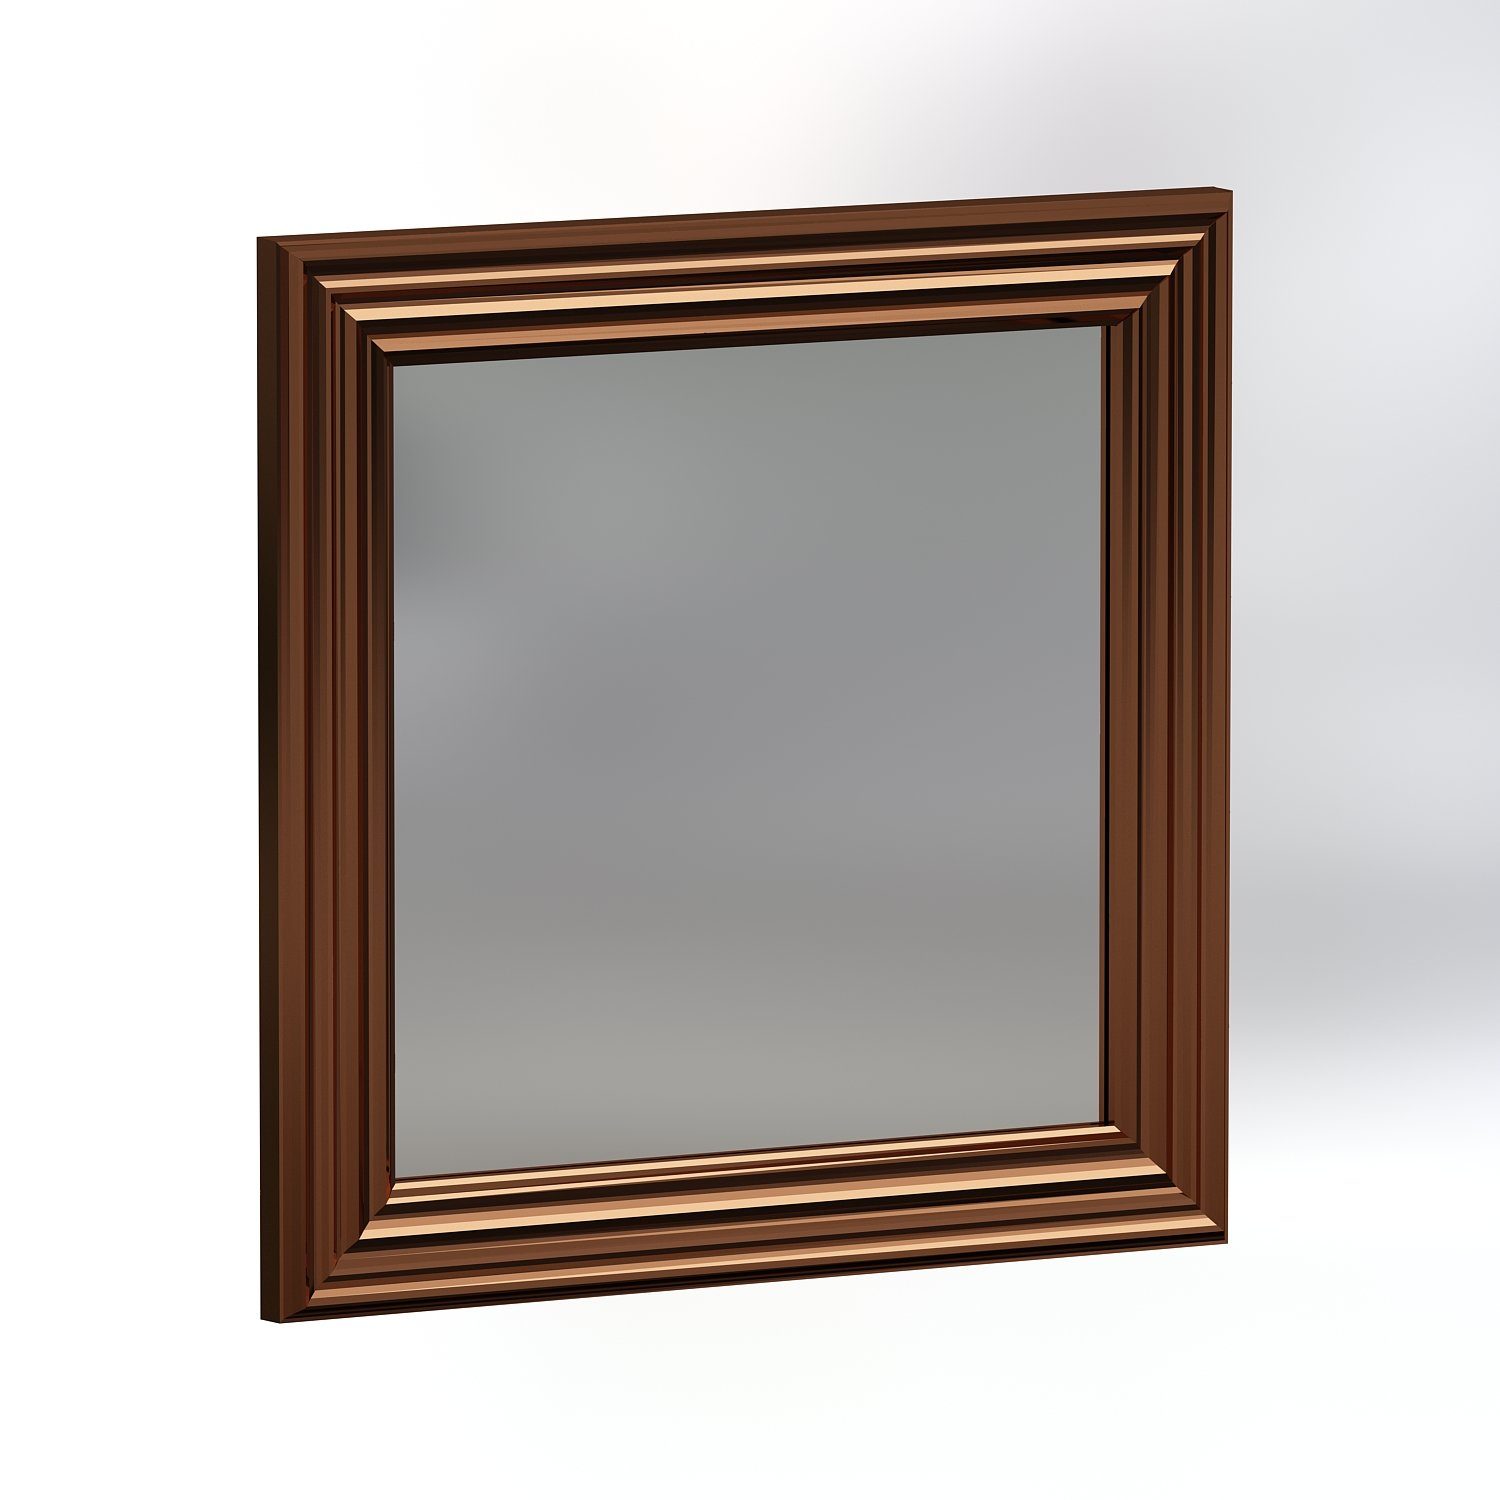 2er Spiegel Bronze Bale Spiegel moebel17